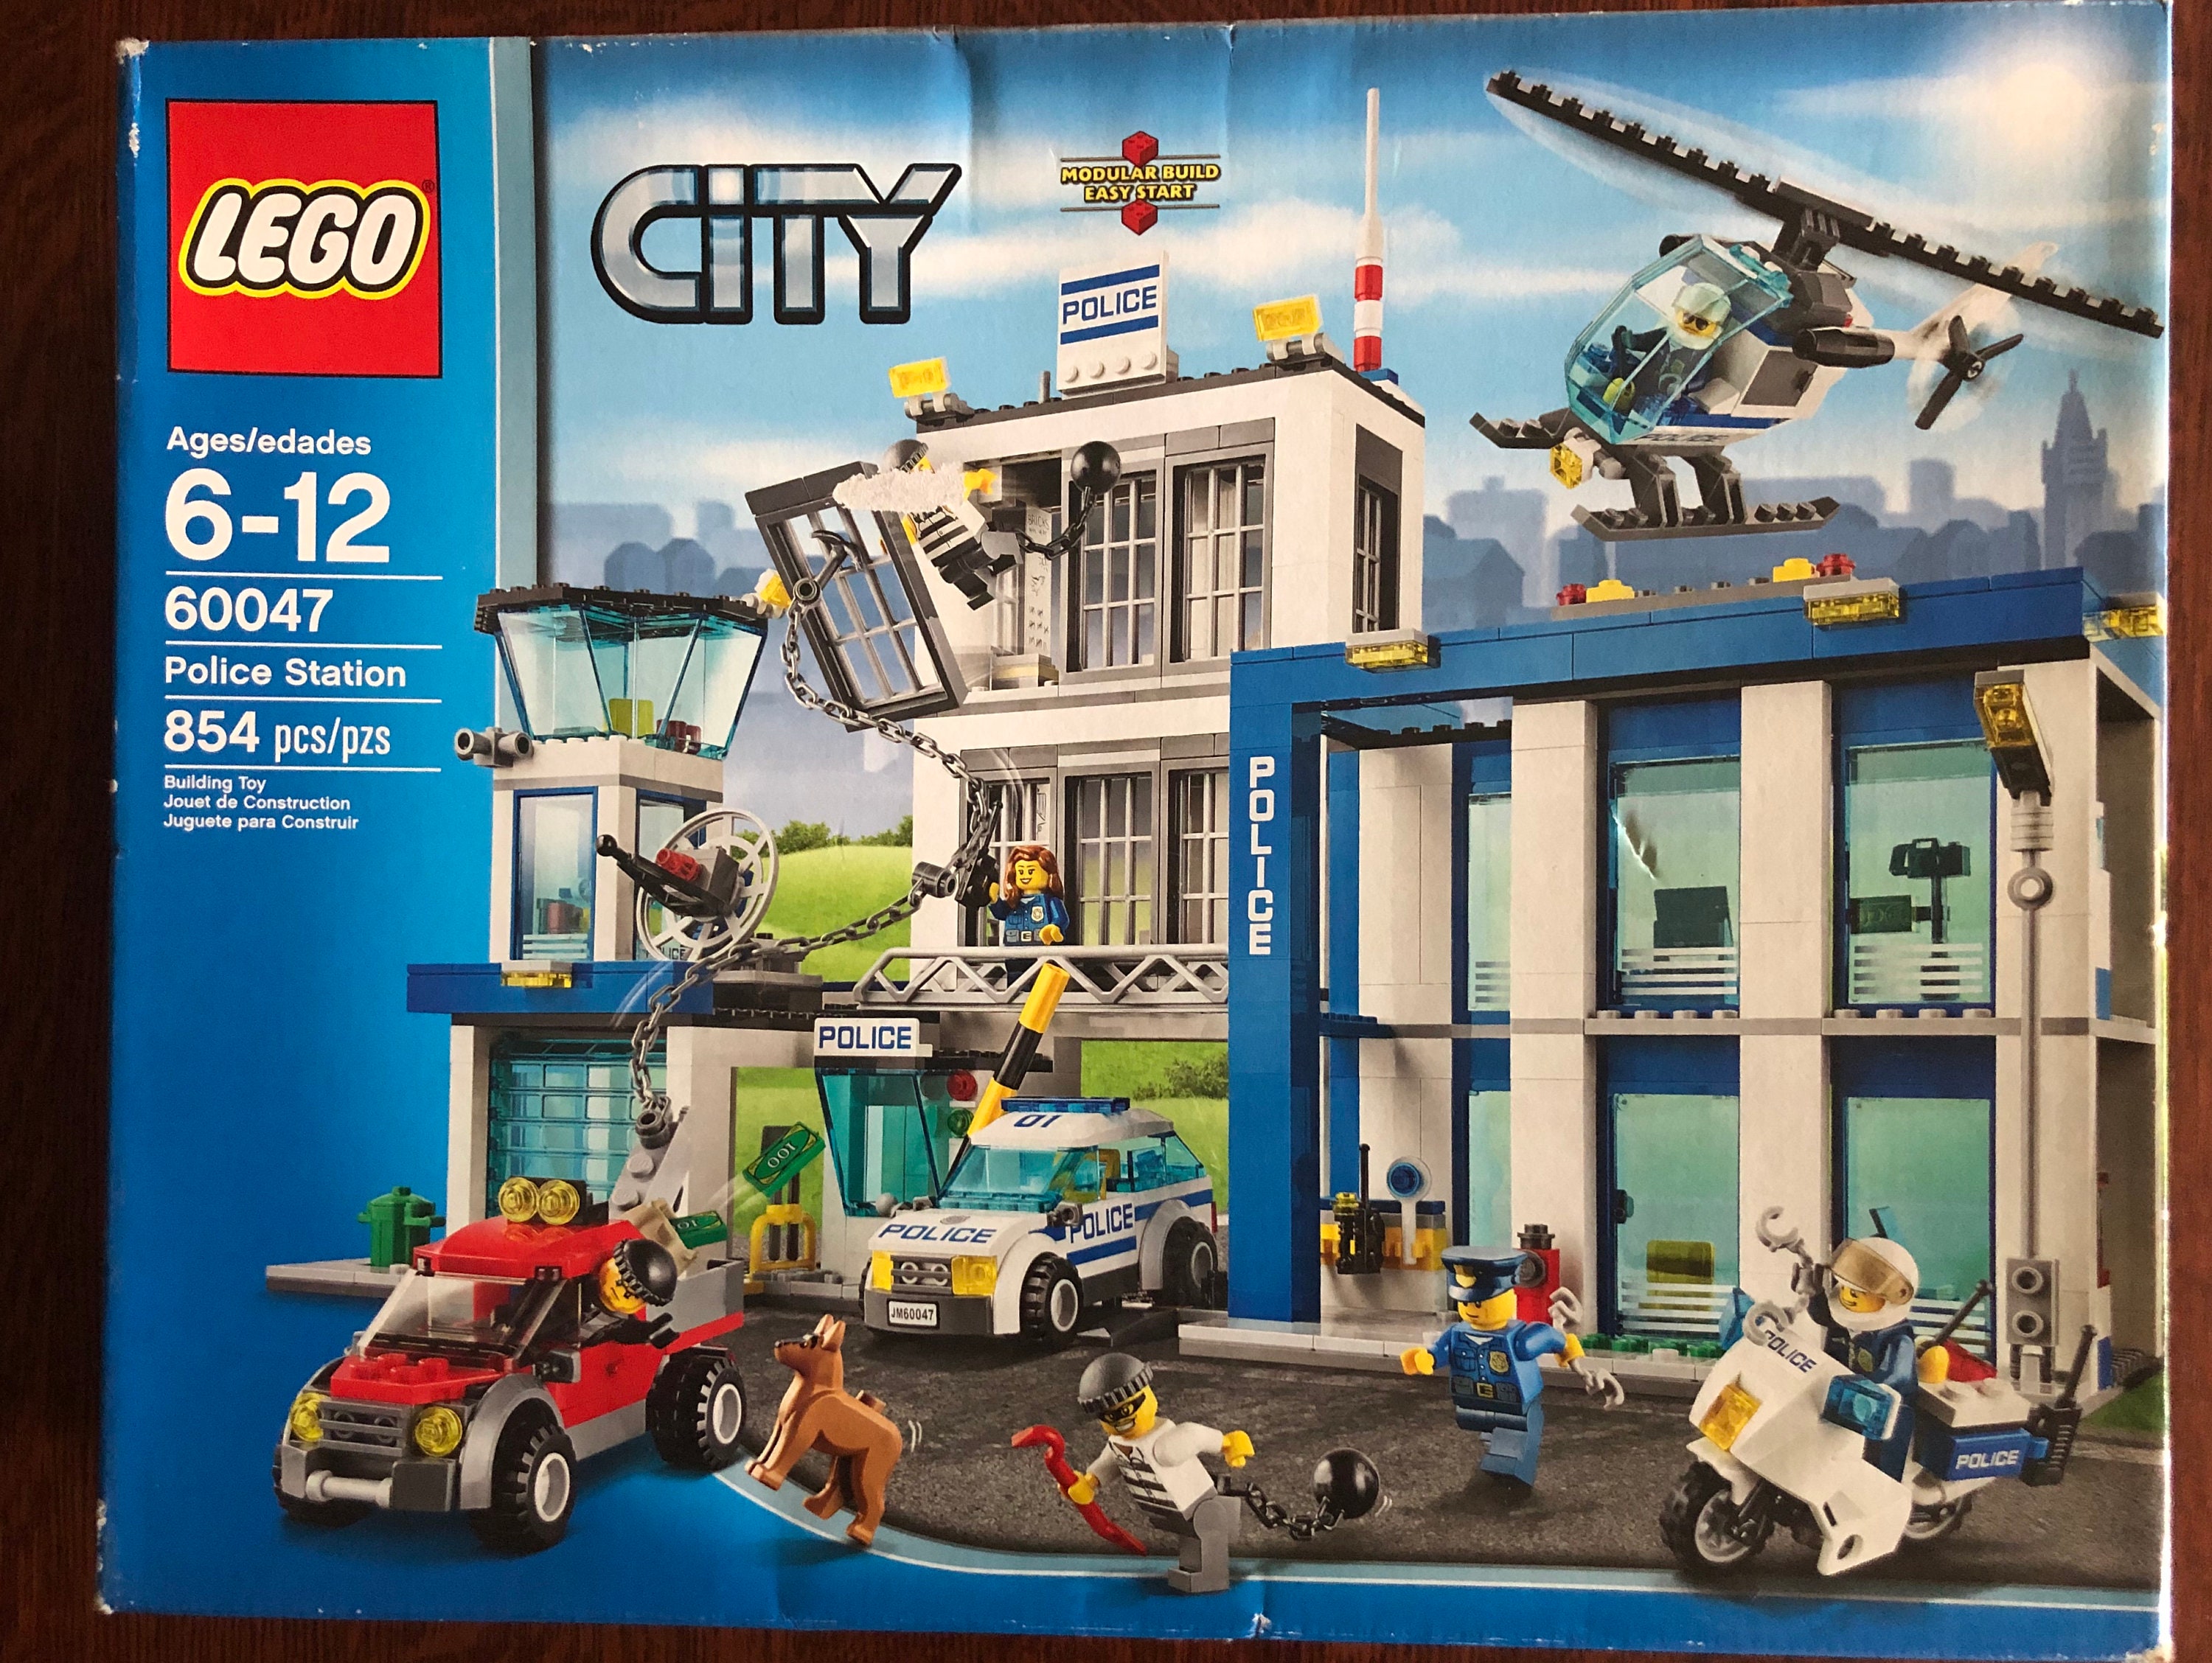 modbydeligt høst Sydamerika LEGO CITY 60047 Police Station 854 Pcs/pzs New in Box - Etsy